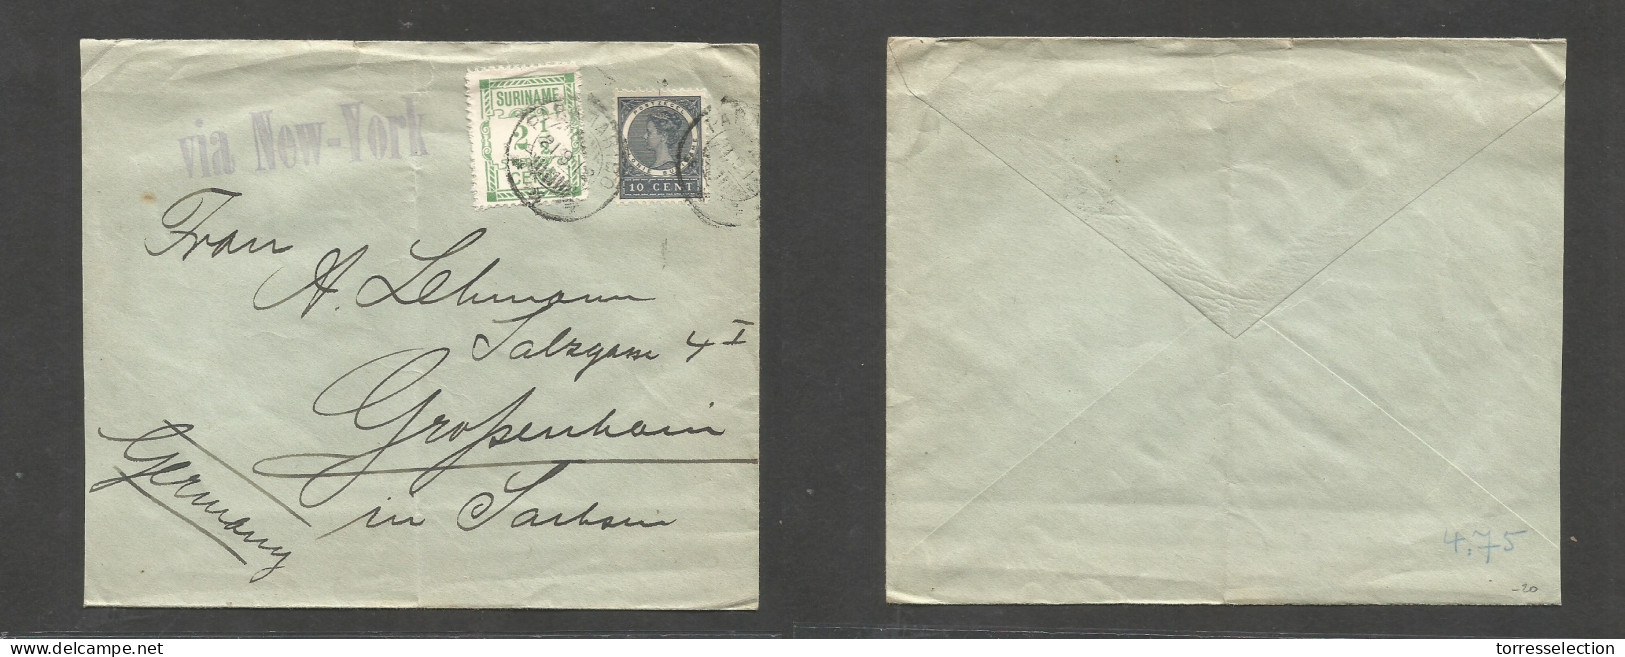 SURINAME. 1912 (21 Sept) Paramaribo - Germany, Grospenheim Via New York. Multifkd Env. Better Usage. SALE. - Suriname